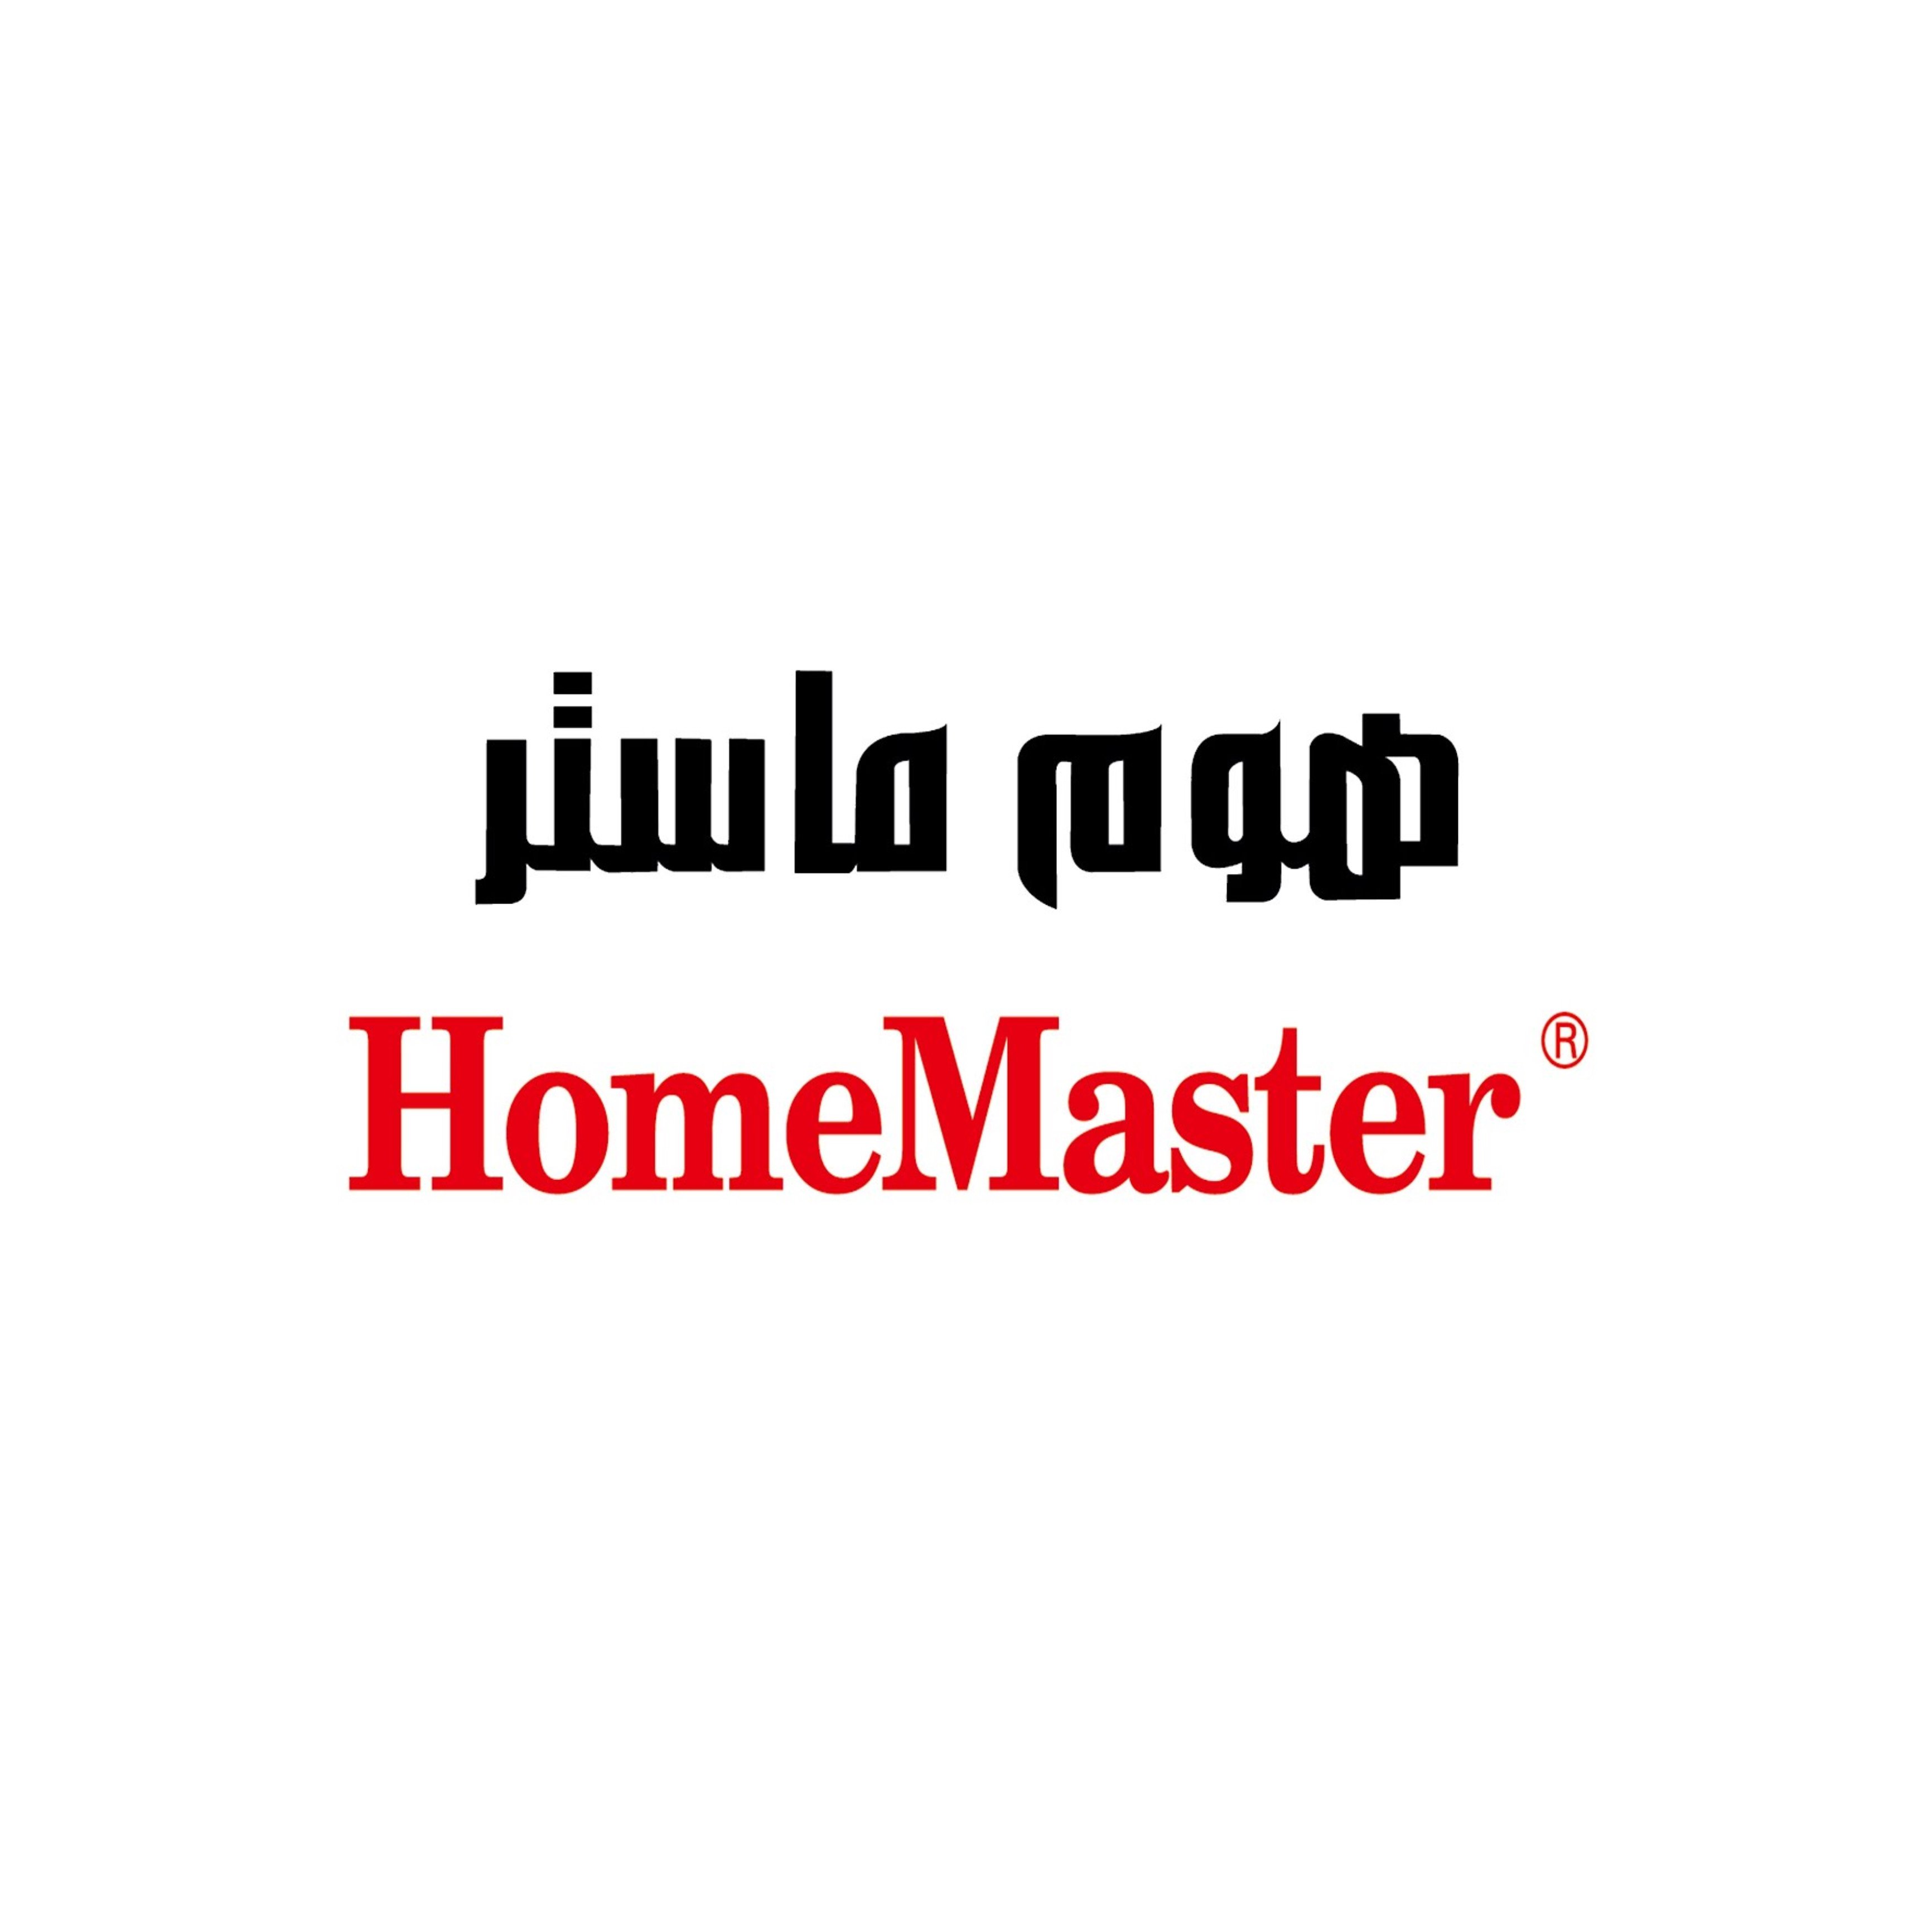 HomeMaster